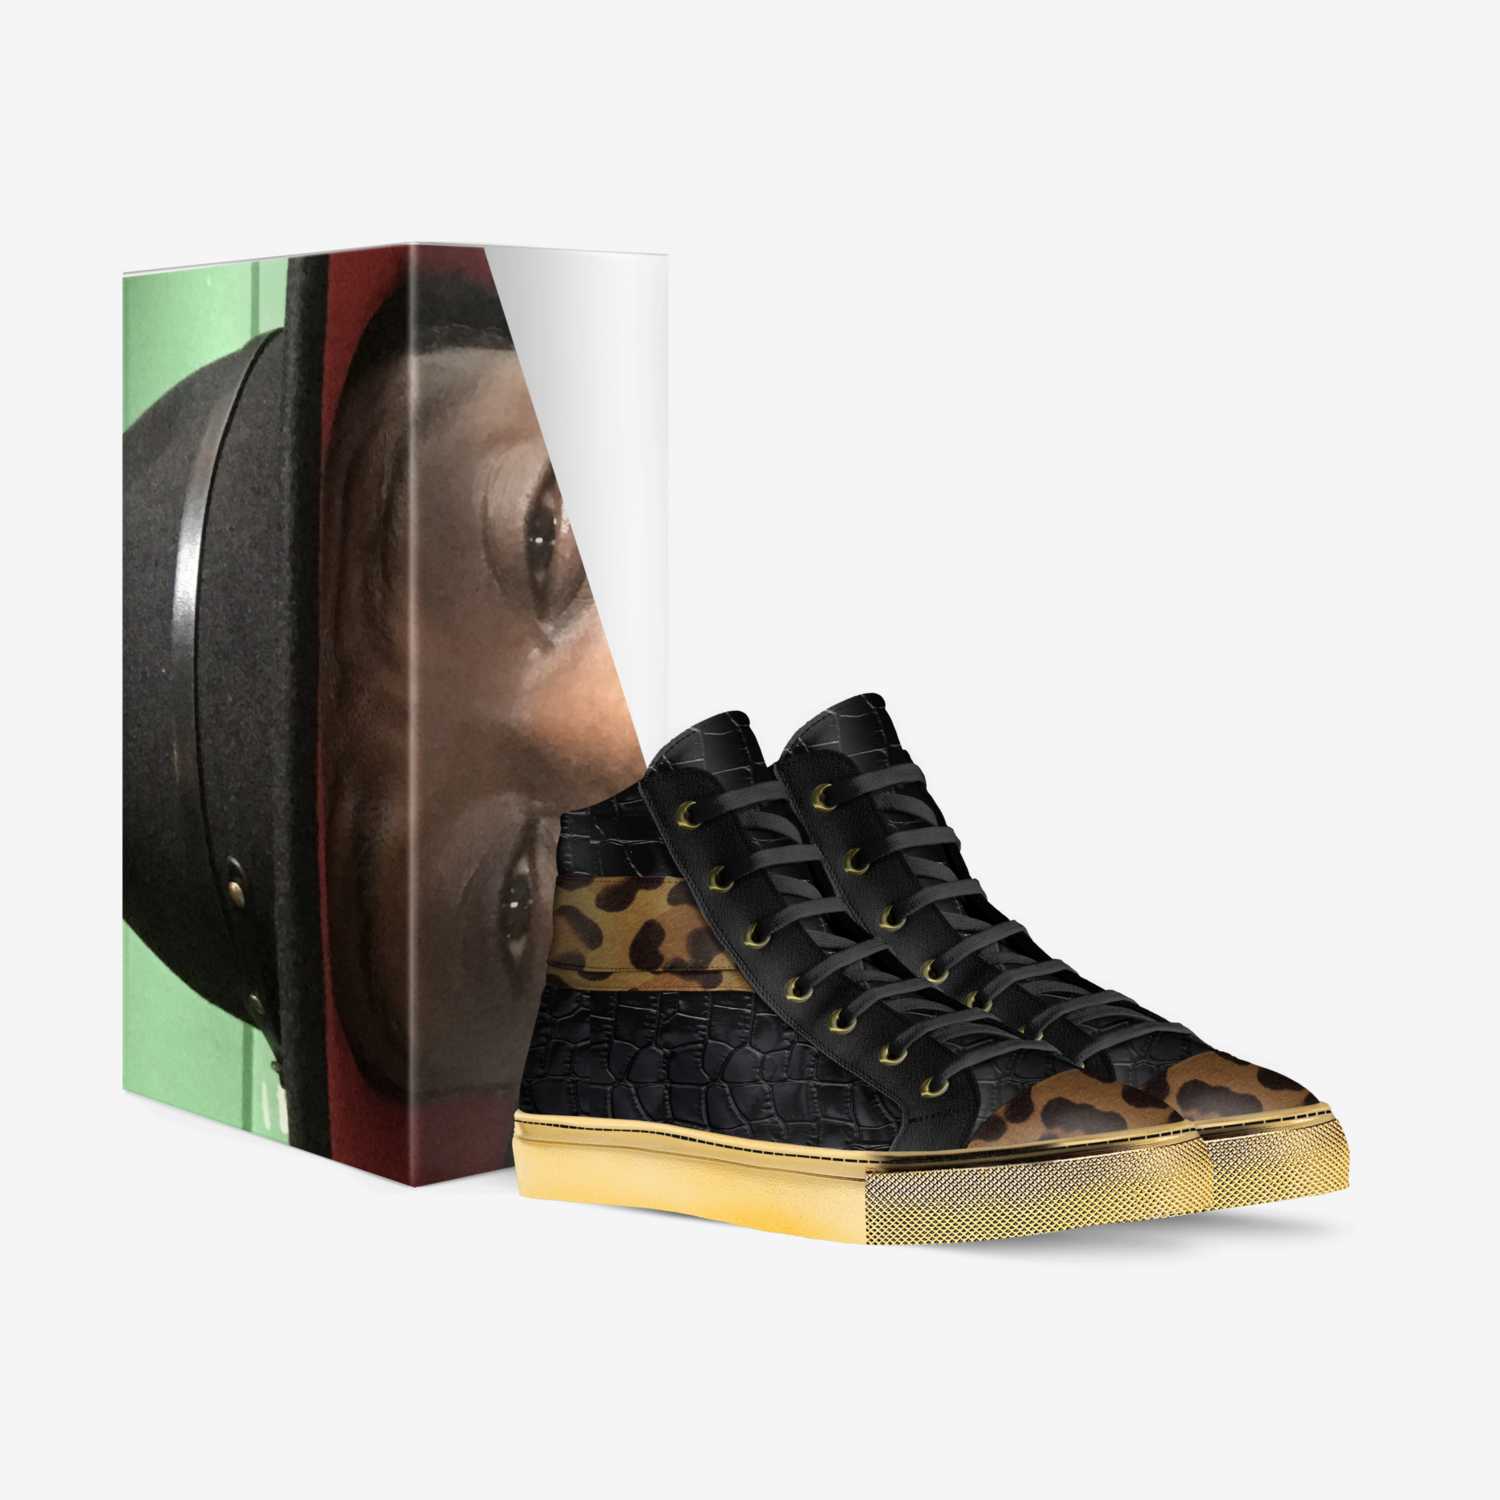 Zukicks  custom made in Italy shoes by Edward Howard | Box view